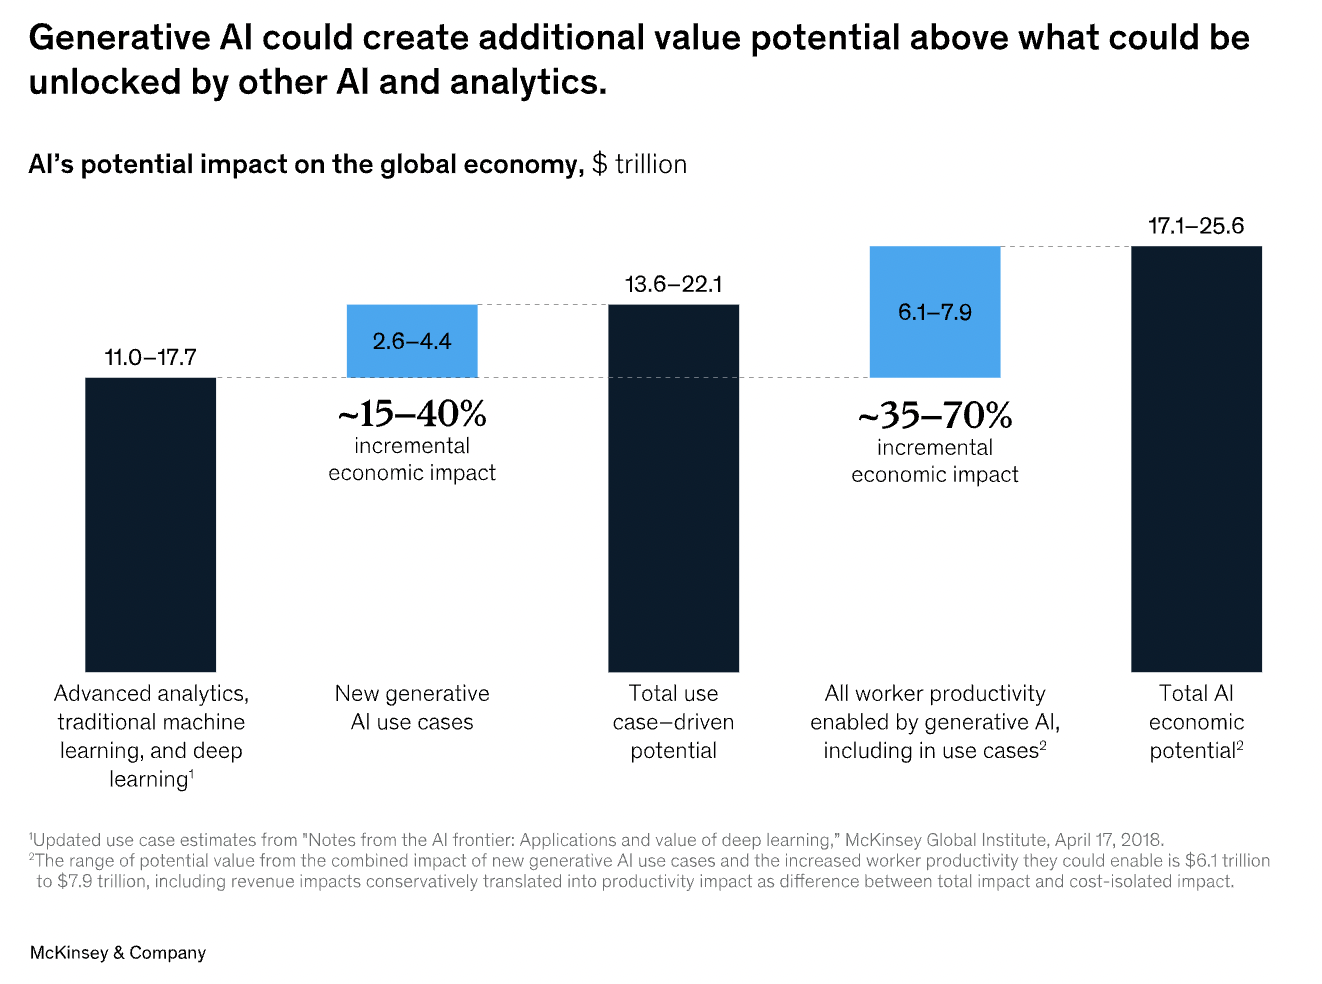 AI's impact on the global economy